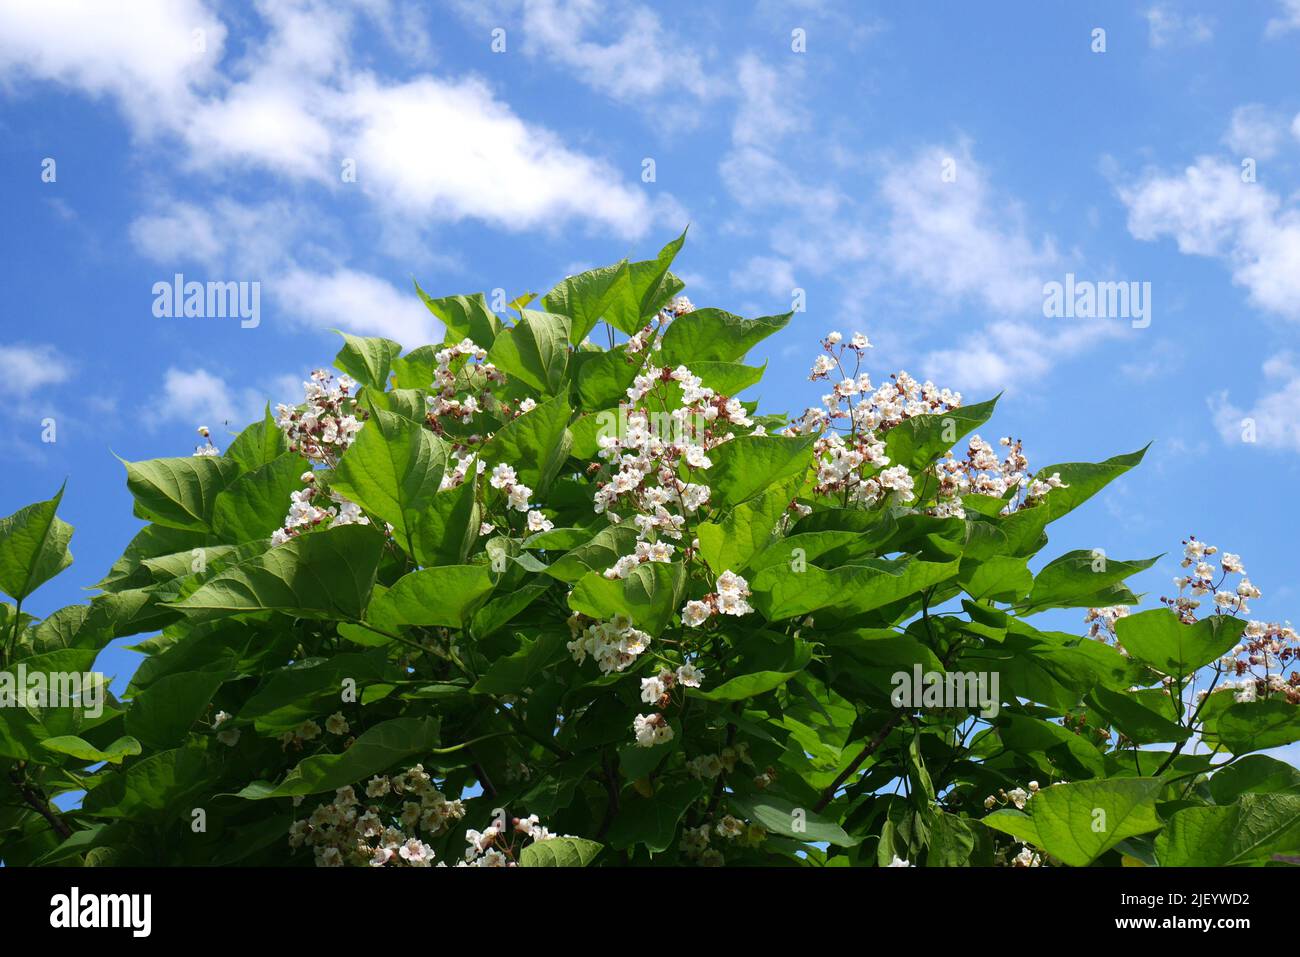 Catalpa tree in flower in a garden, Hungary Stock Photo